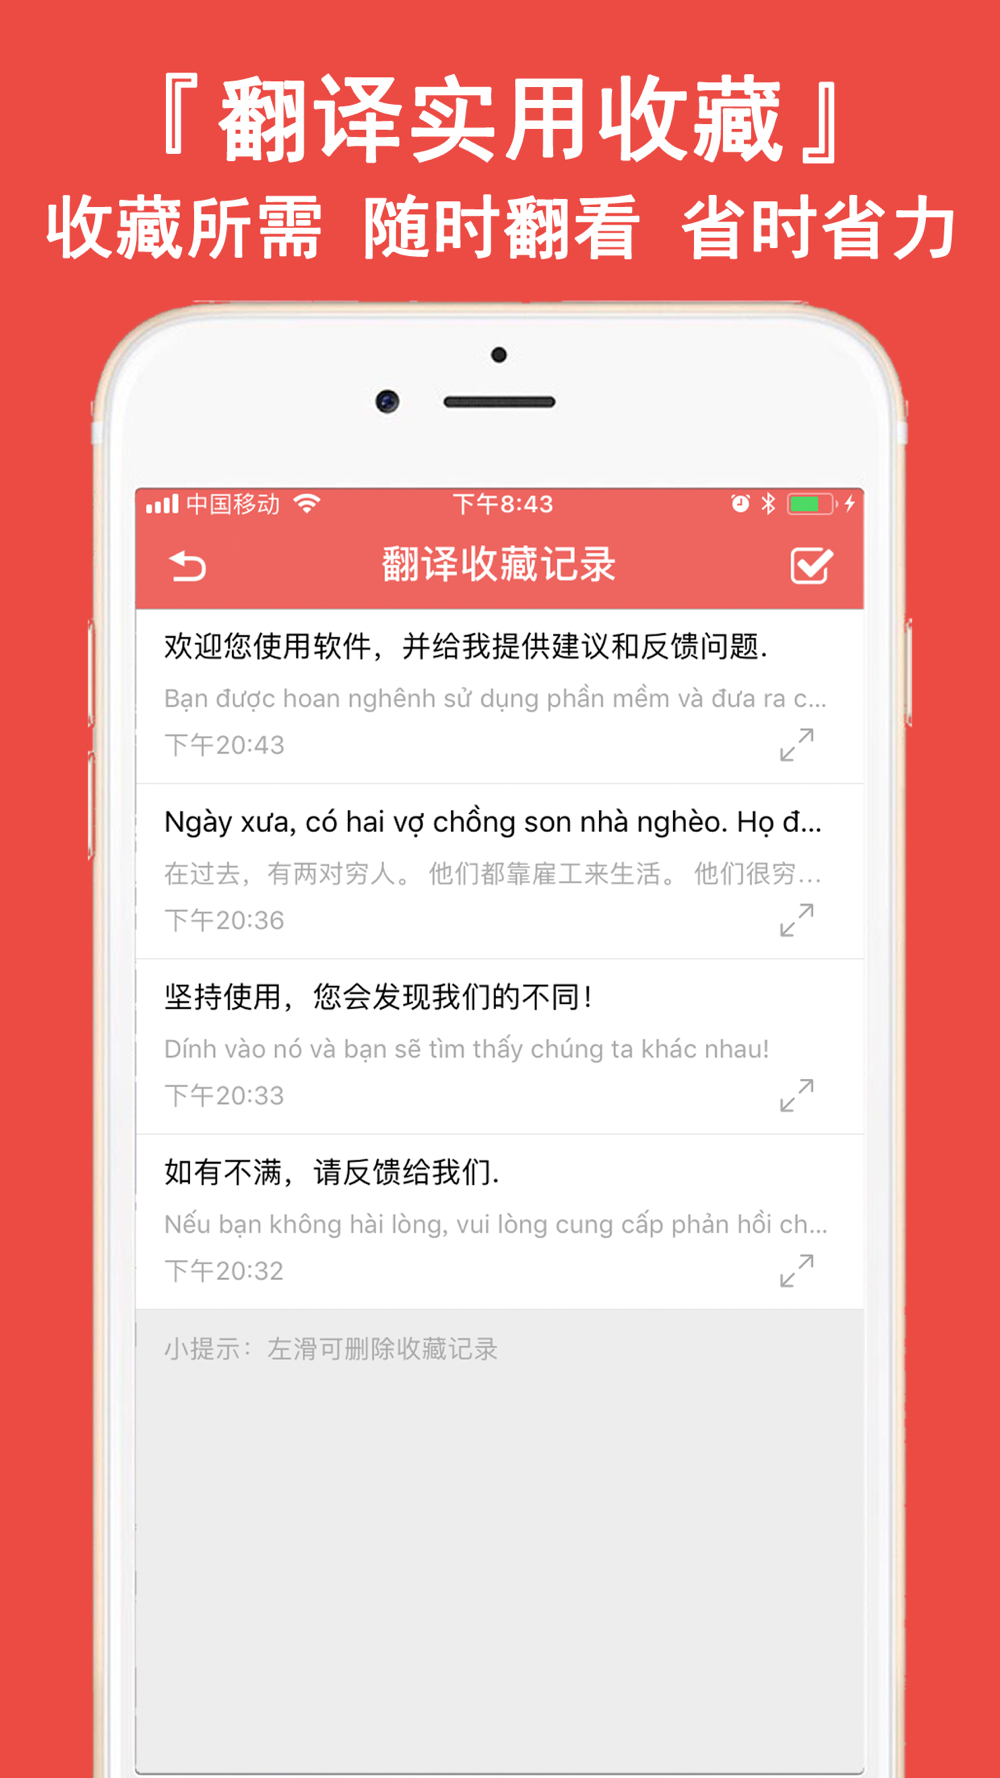 越南语翻译官 越南语学习翻译软件free Download App For Iphone Steprimo Com